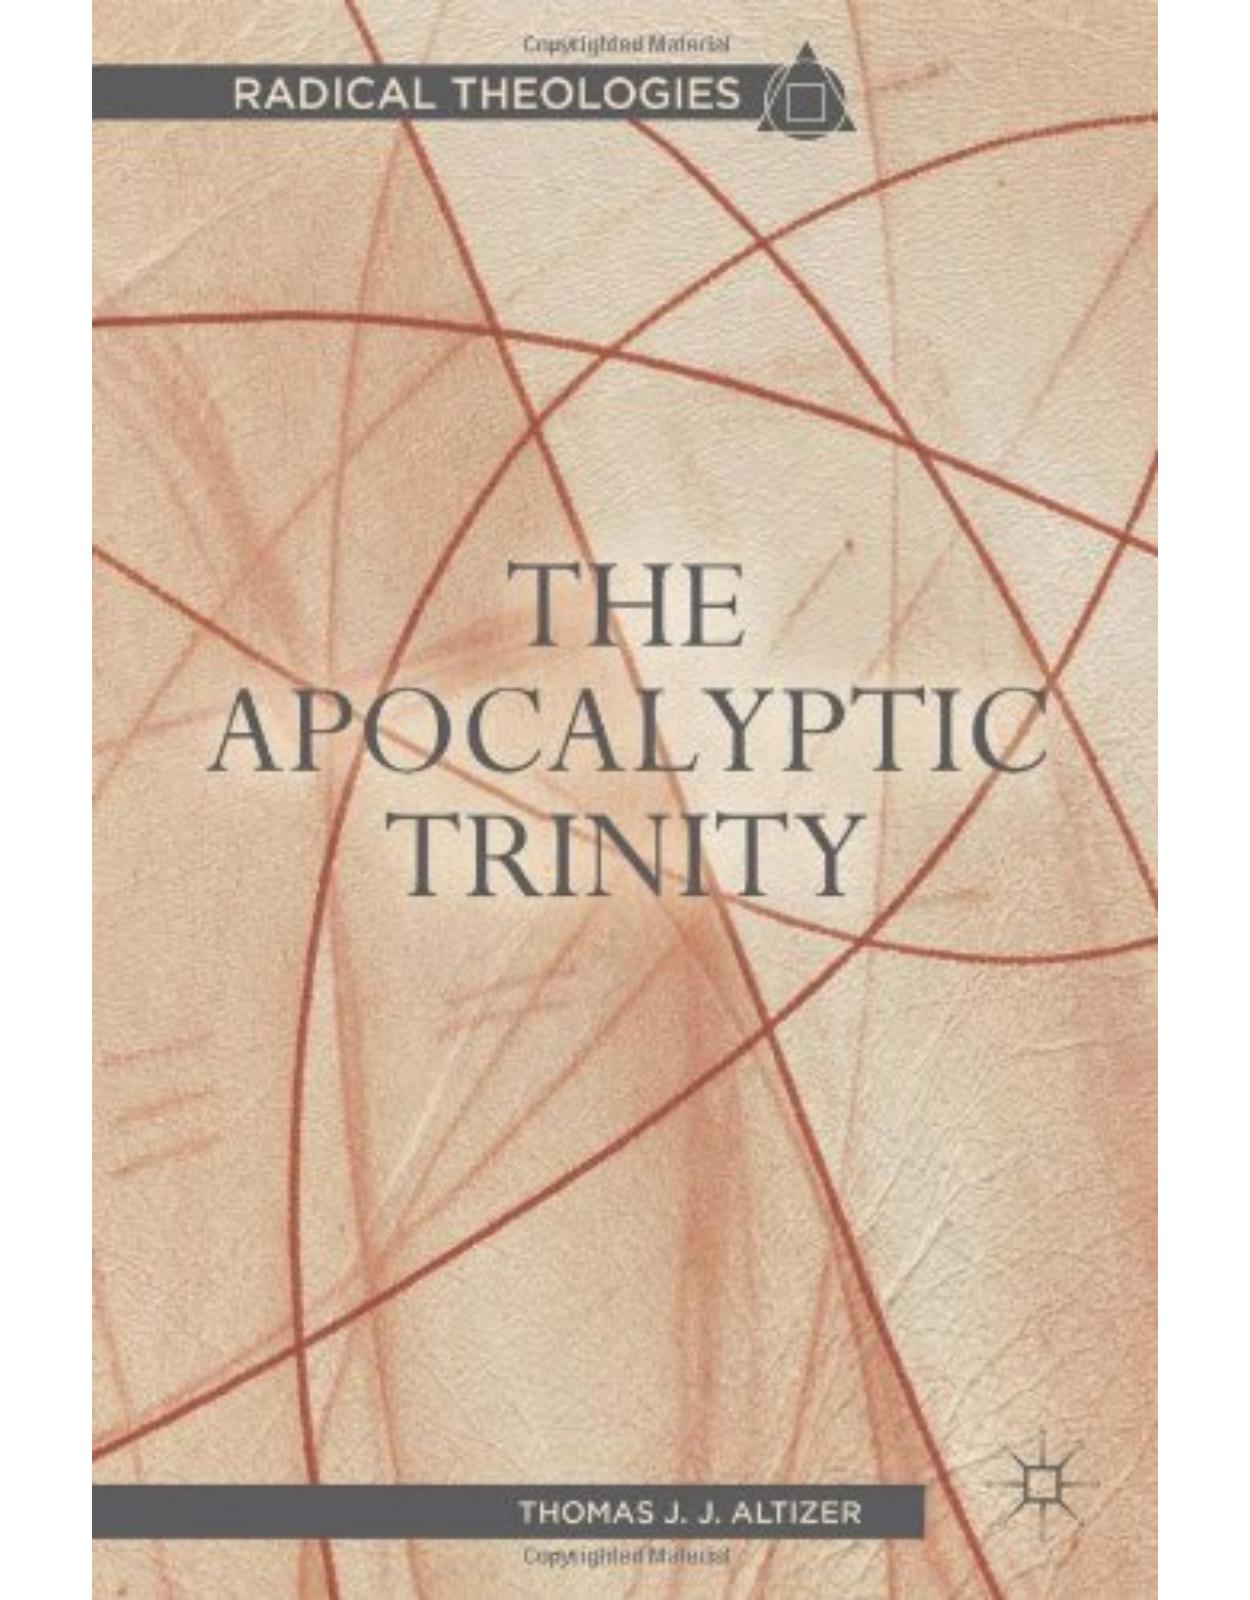 The Apocalyptic Trinity (Radical Theologies)